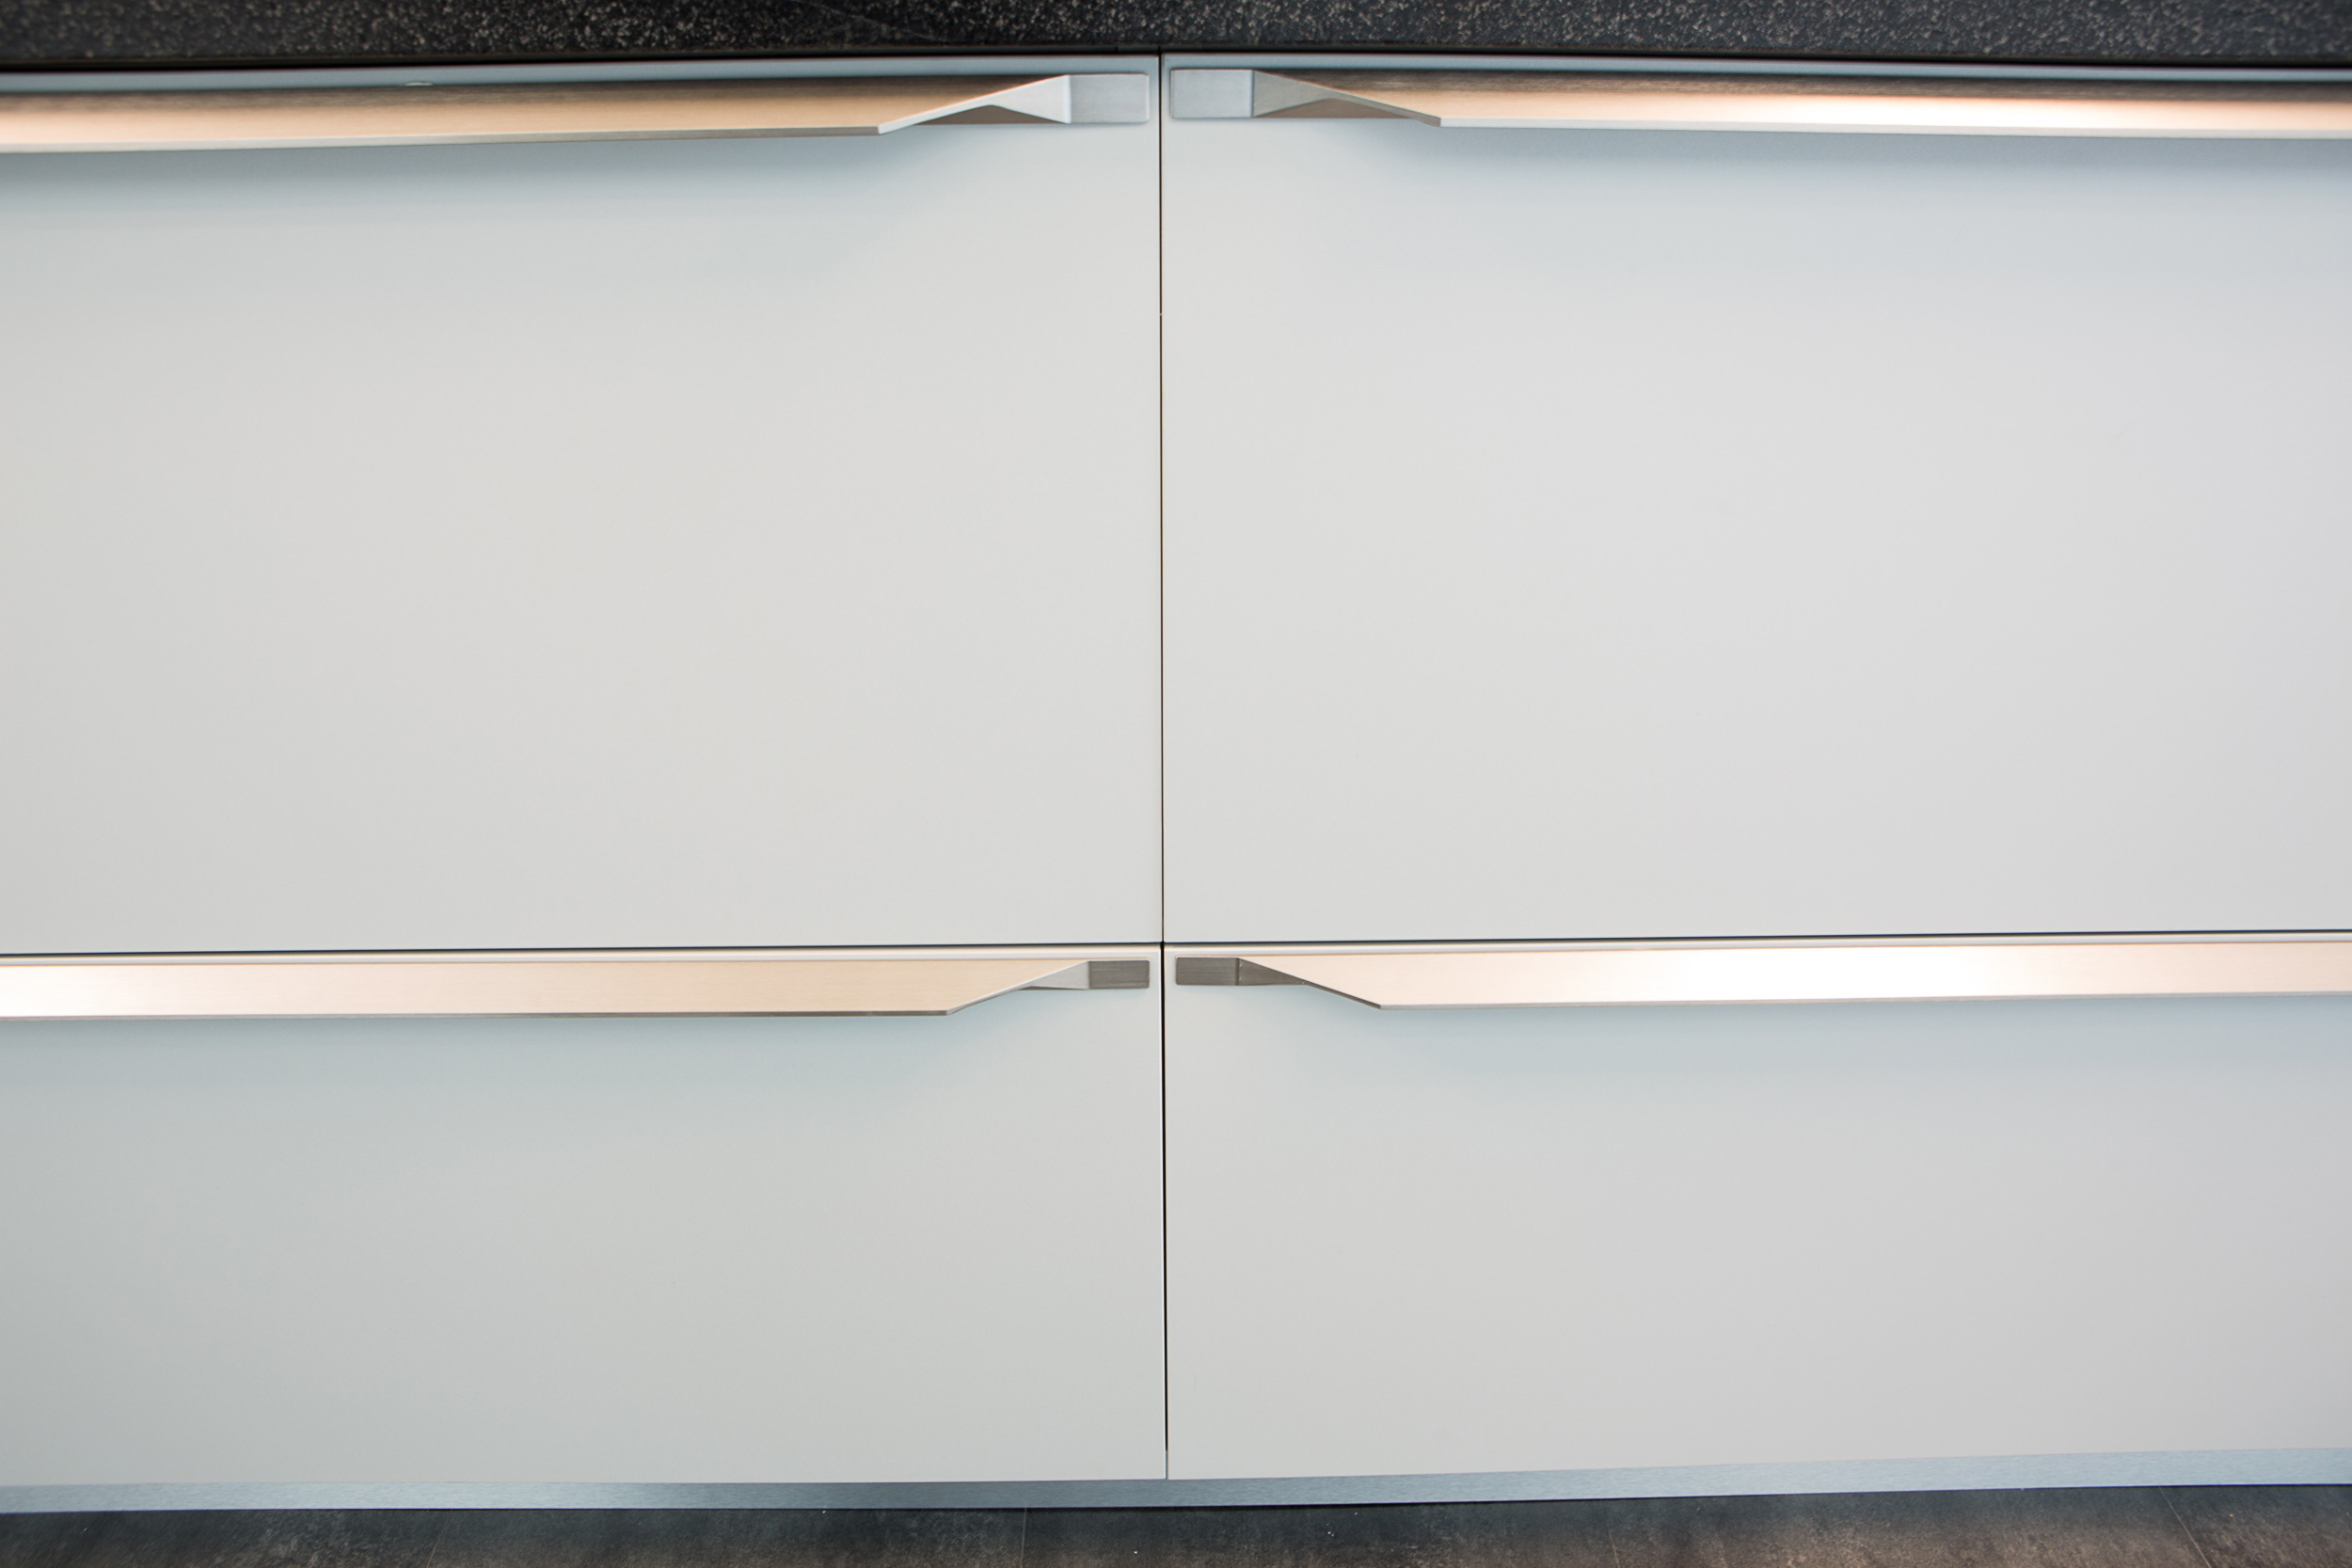 Tamm aluminum kitchen handle by Viefe. Tirador de cocina de aluminio.